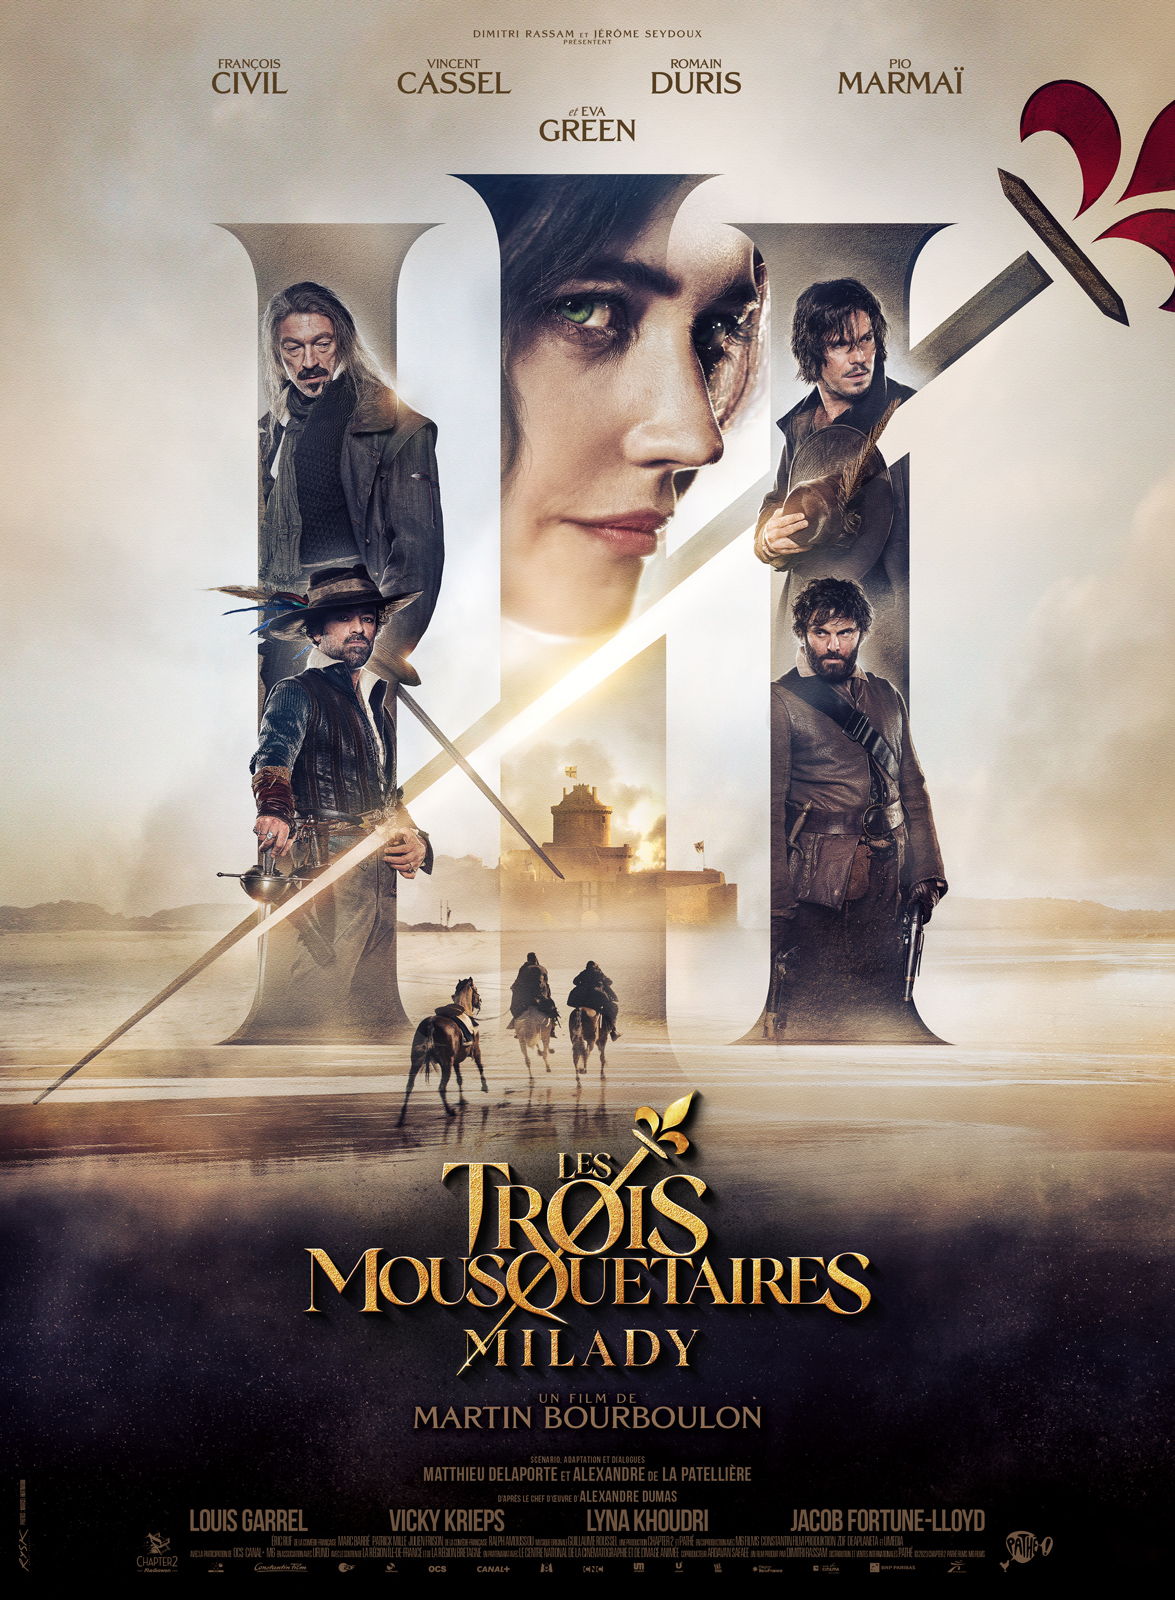 Les Trois Mousquetaires: Milady - film 2023 streaming VF gratuit complet